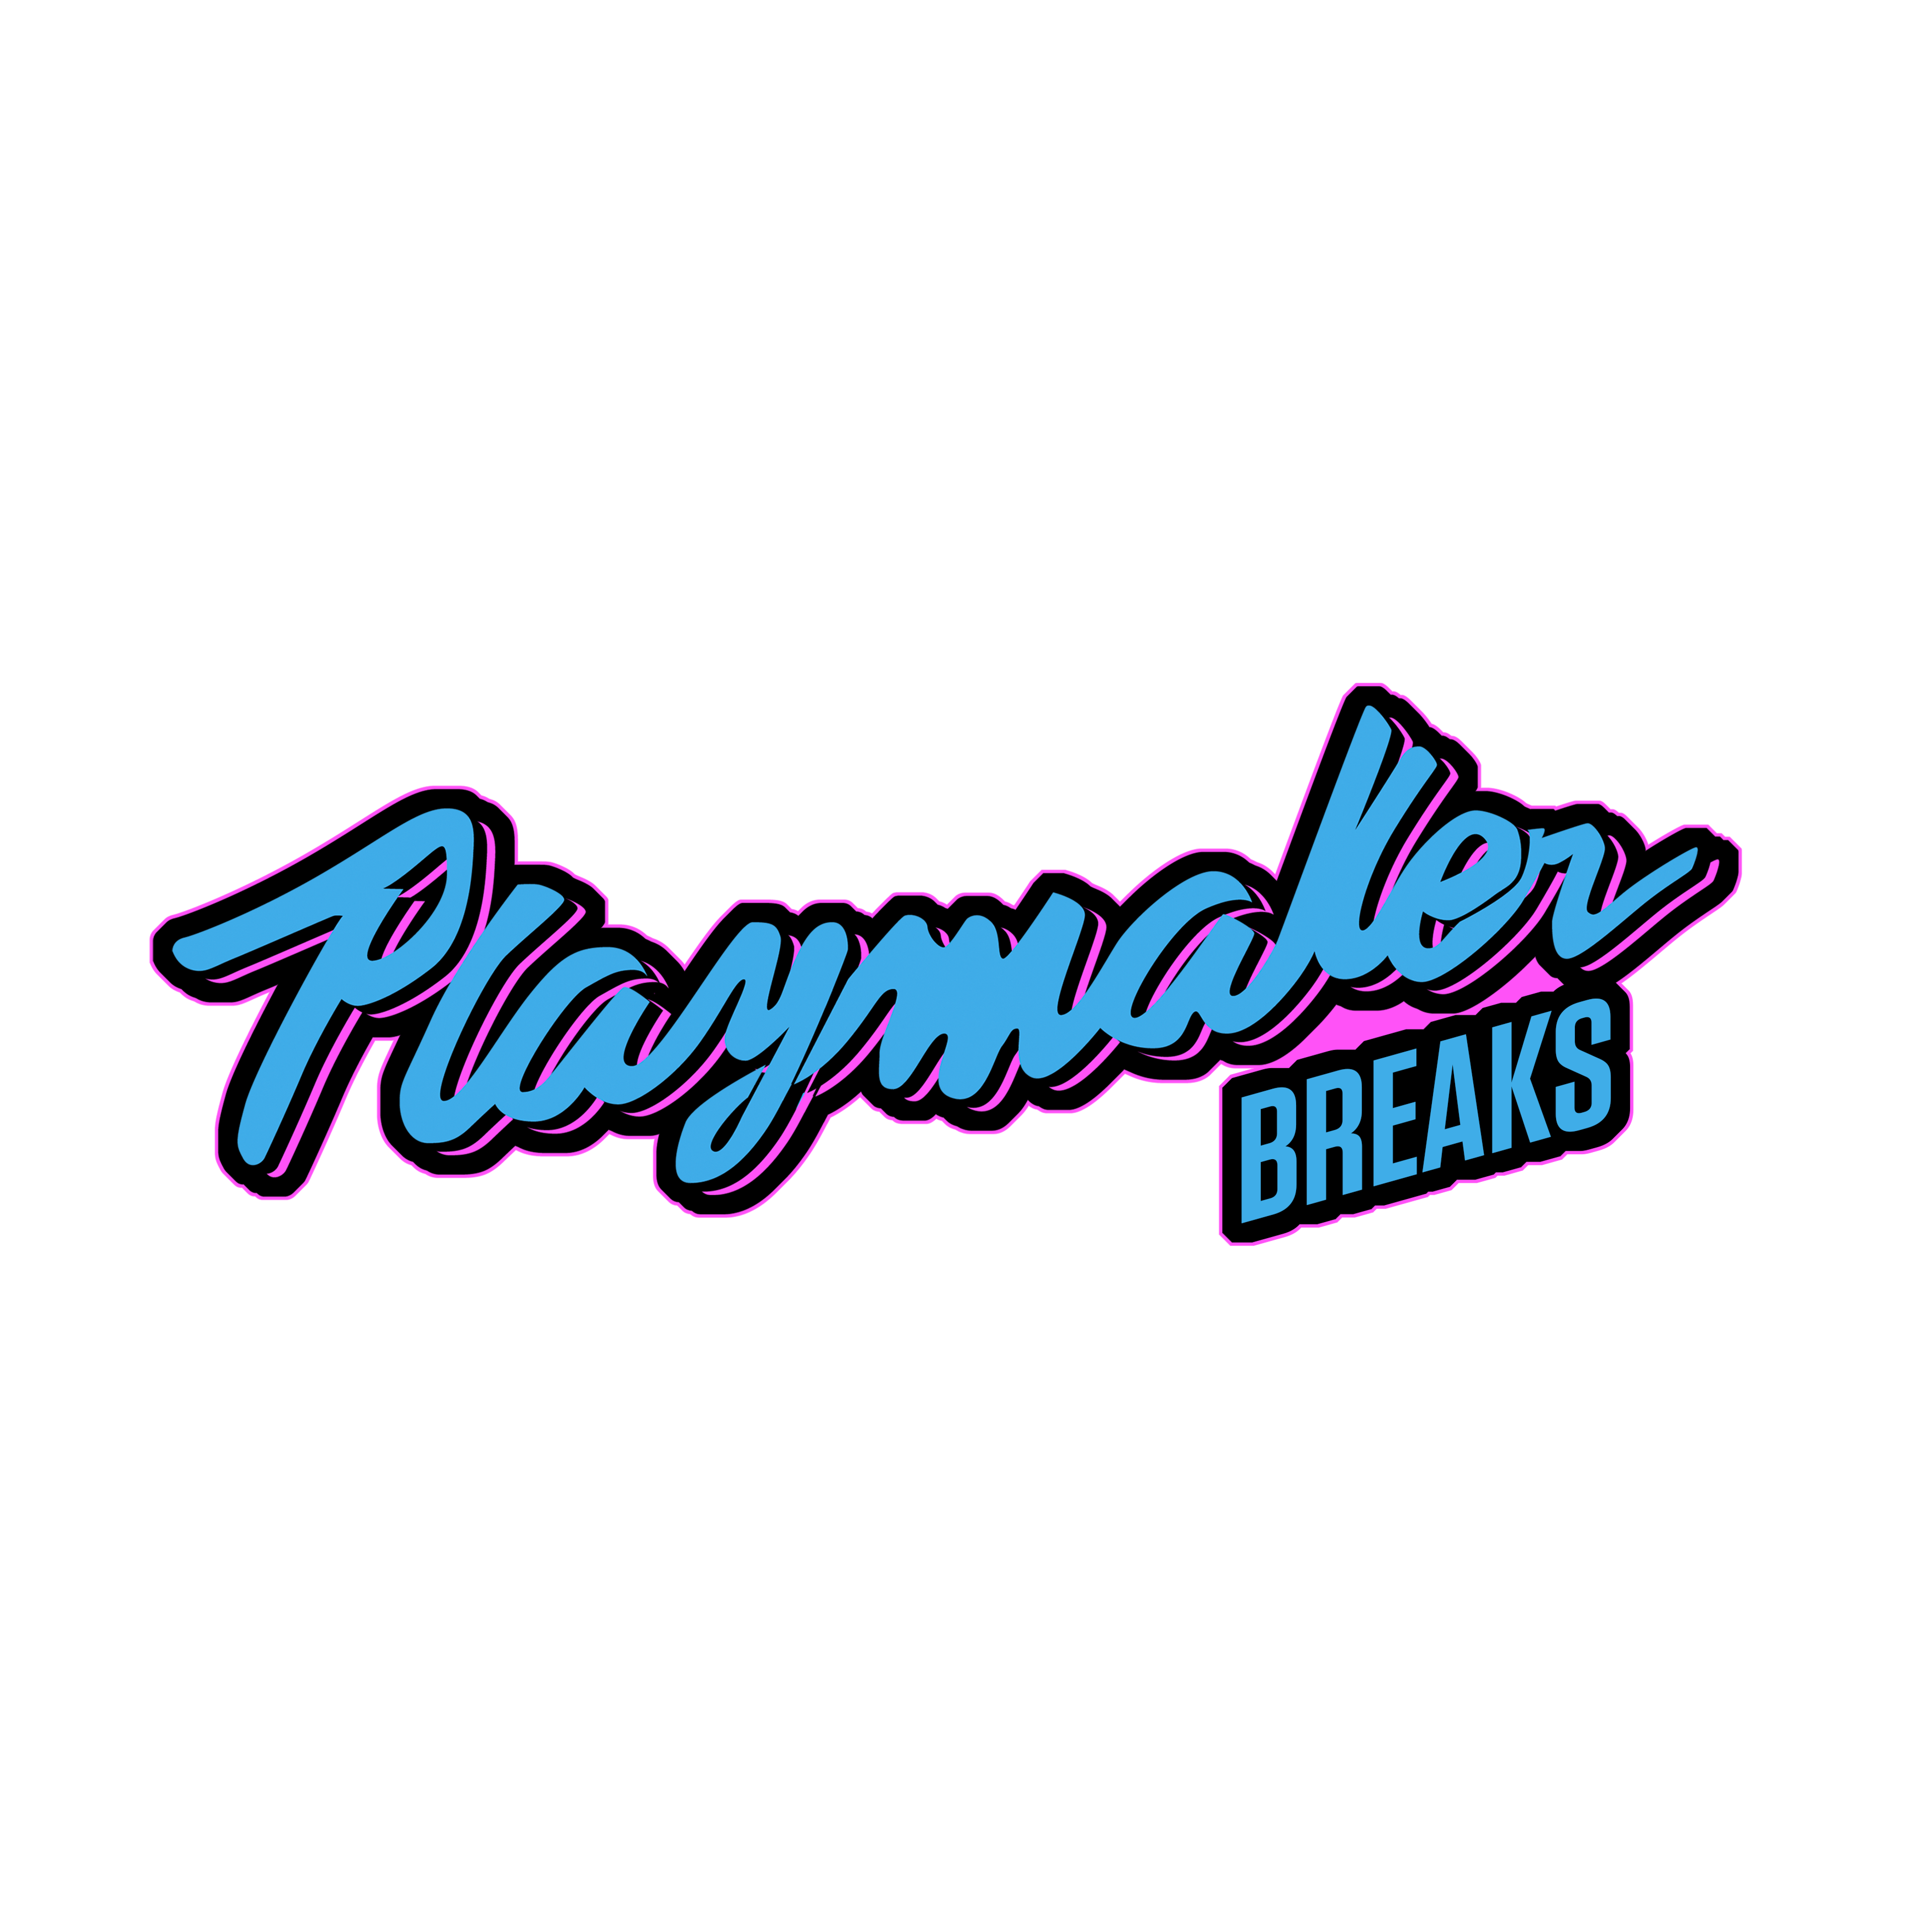 Playmaker HQ